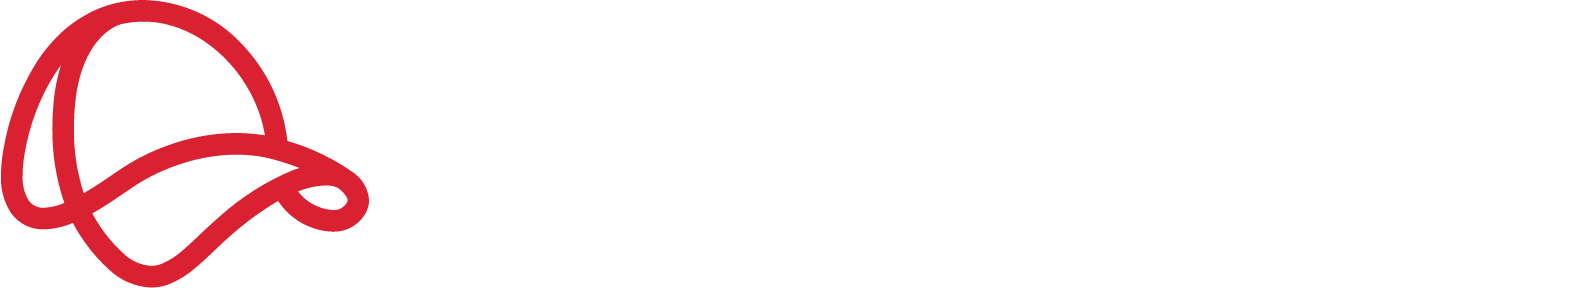 Mr Price Group logo large for dark backgrounds (transparent PNG)